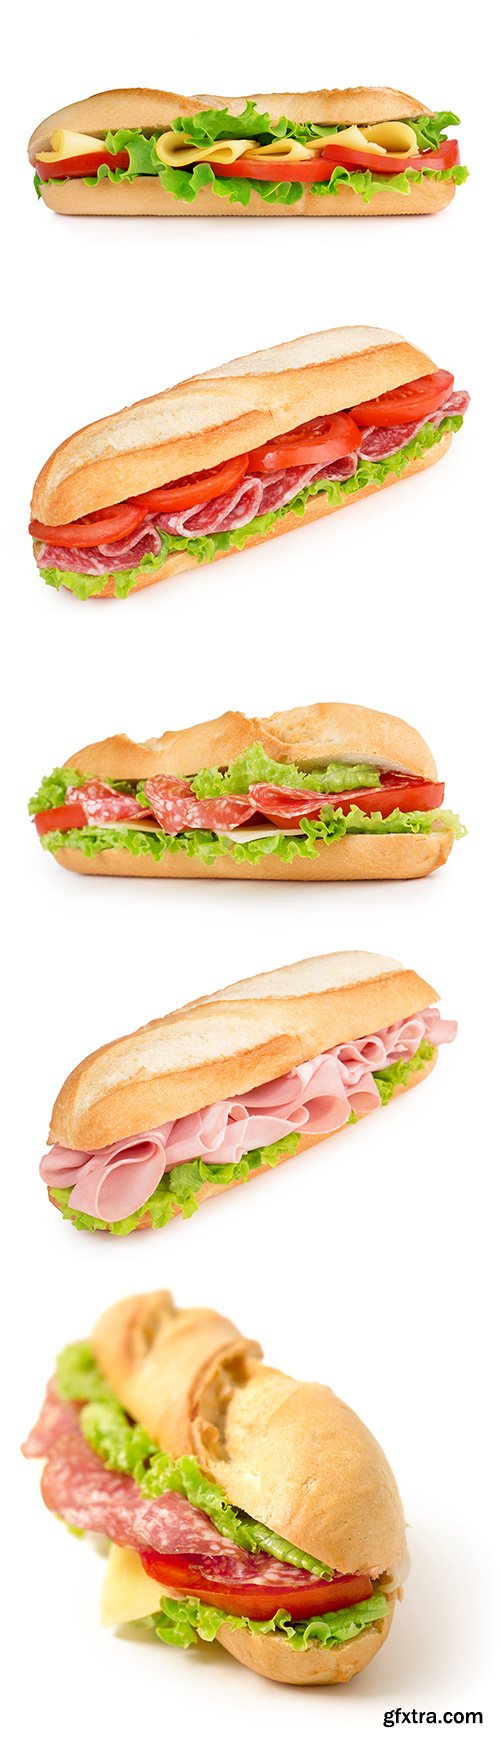 Sandwich Isolated - 11xJPGs